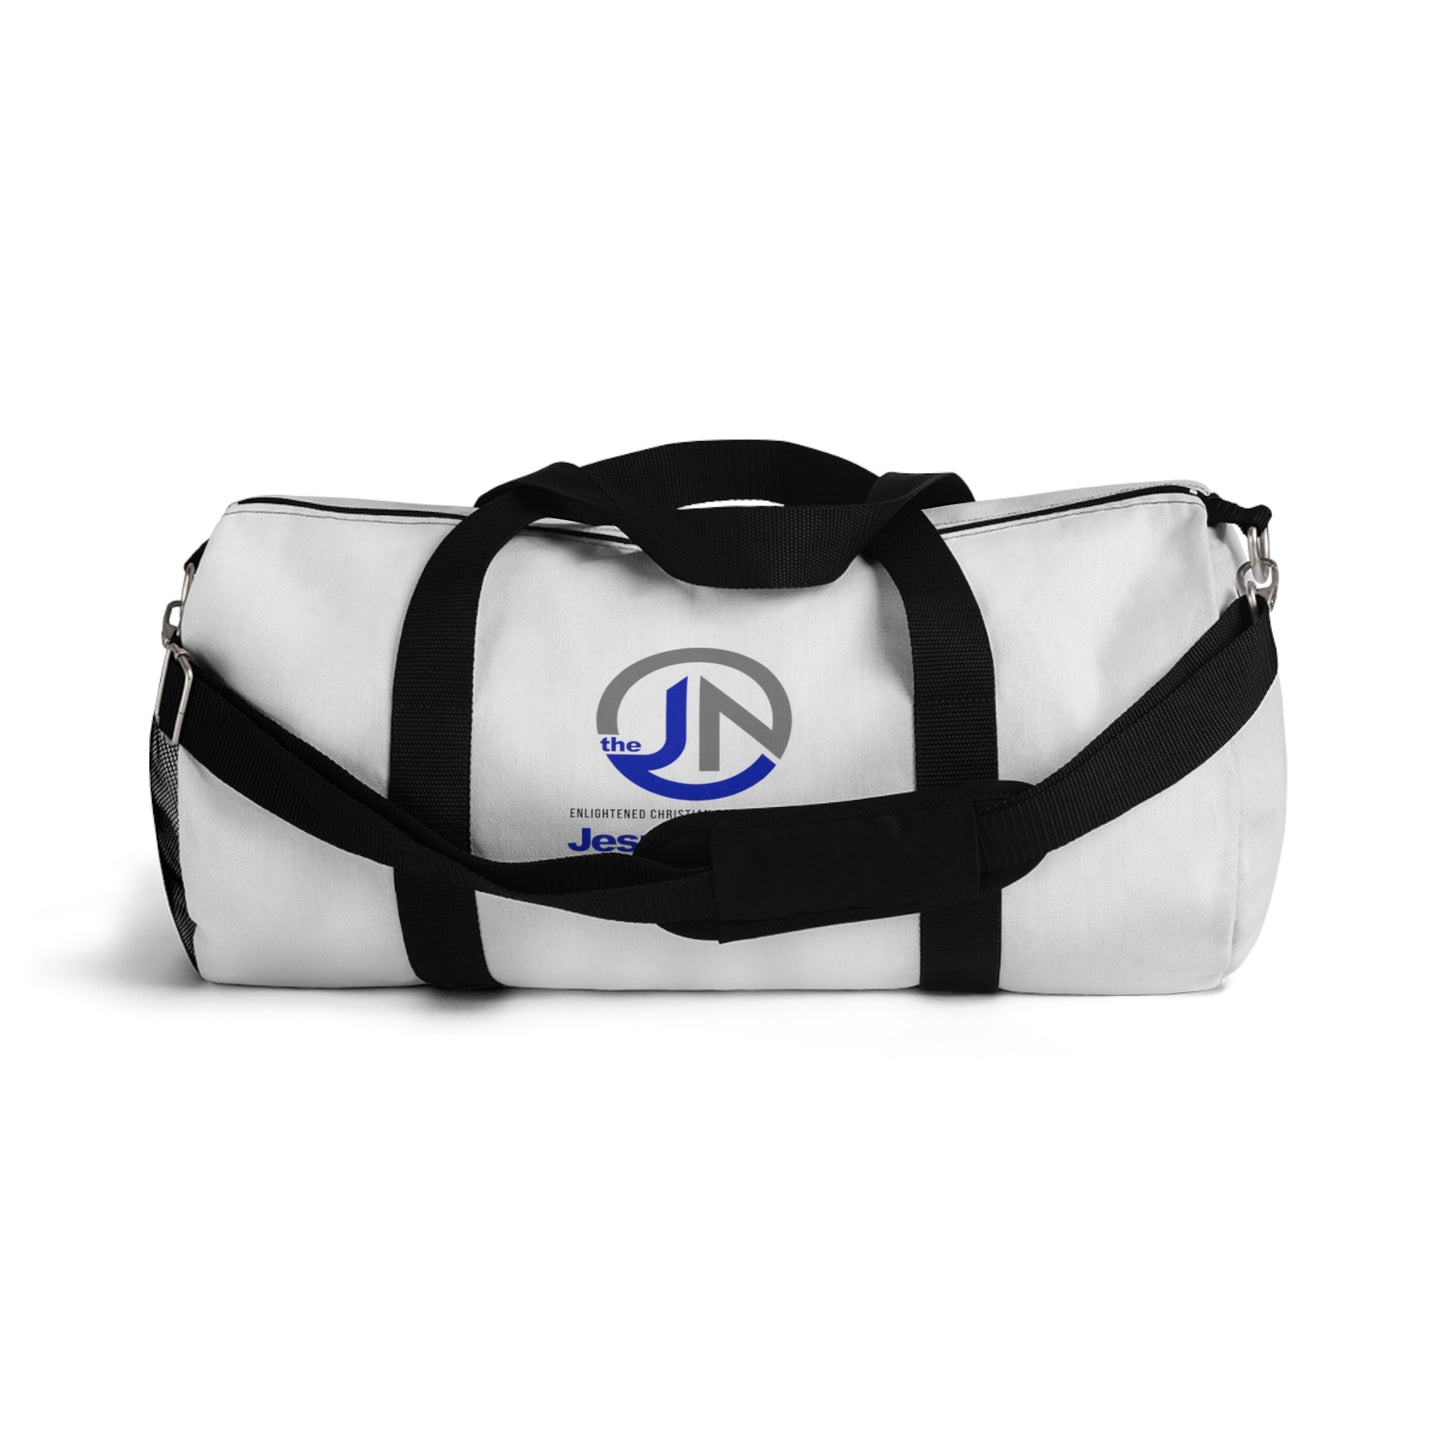 Tsalack Express TJNC Duffel Bag